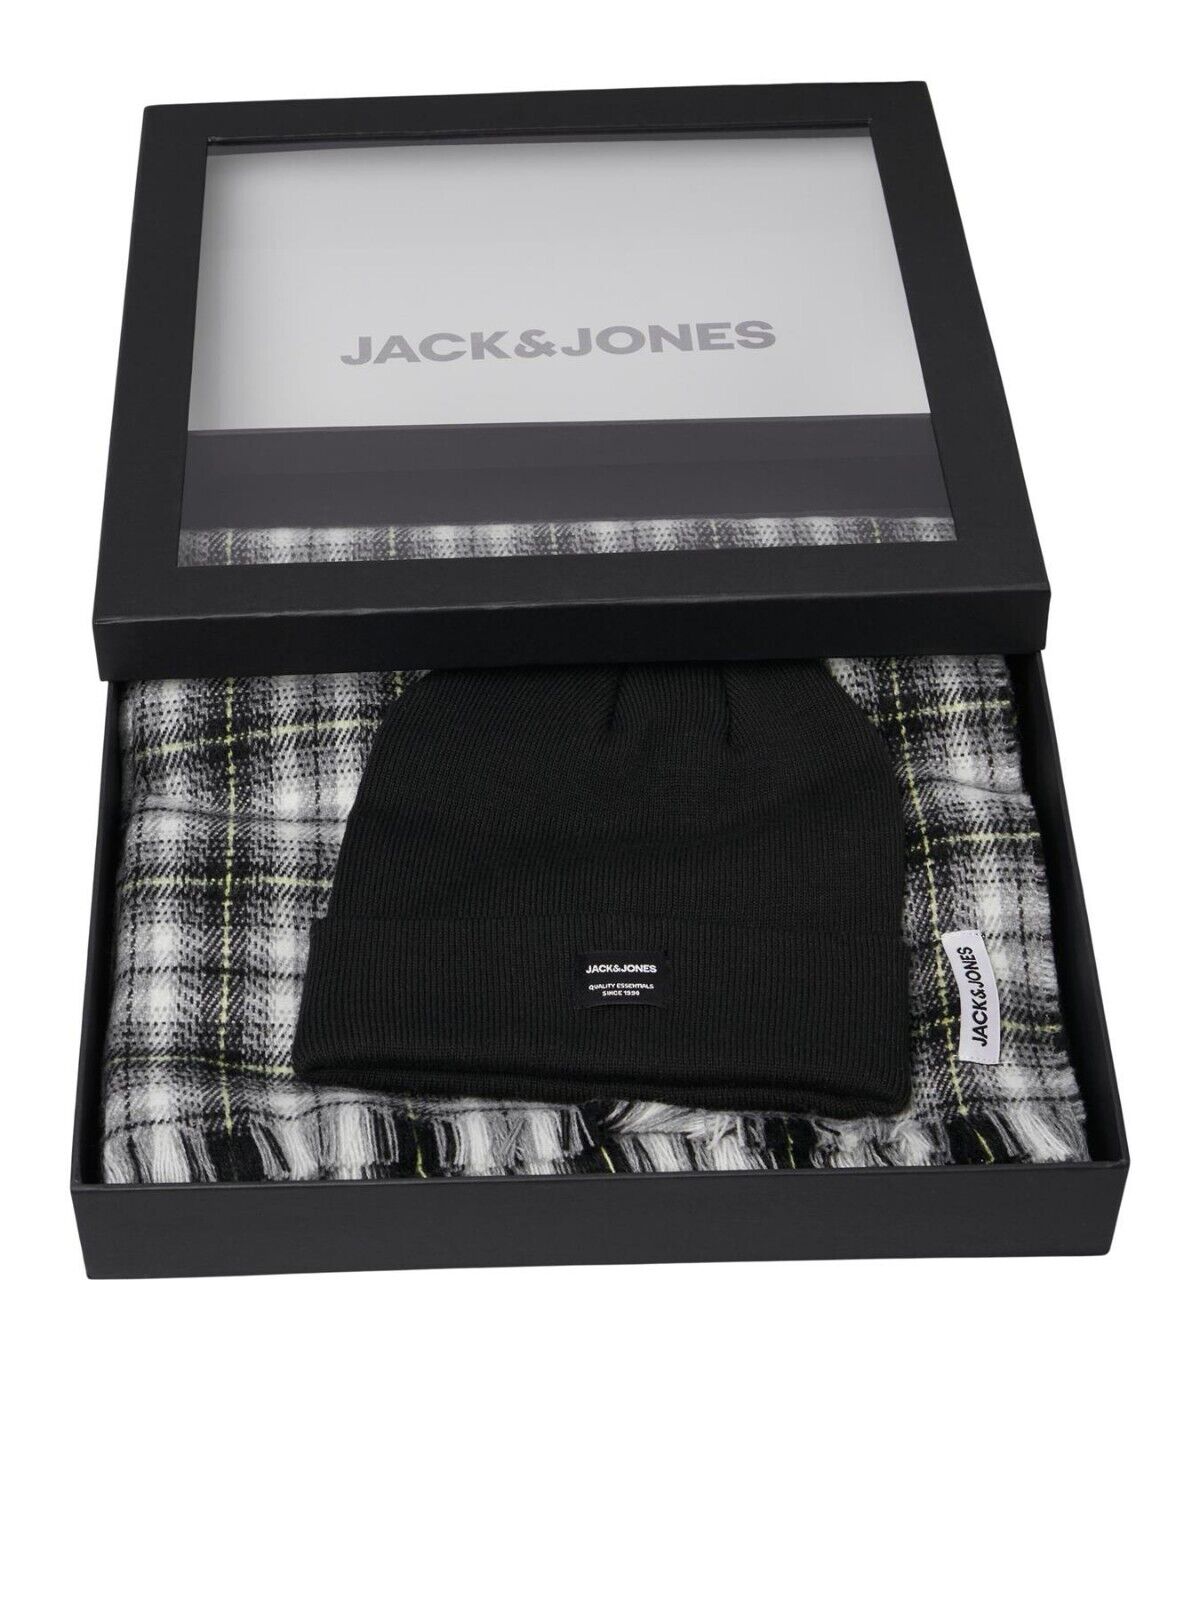 Jack & Jones 'Frost' Hat & Scarf Gift Box